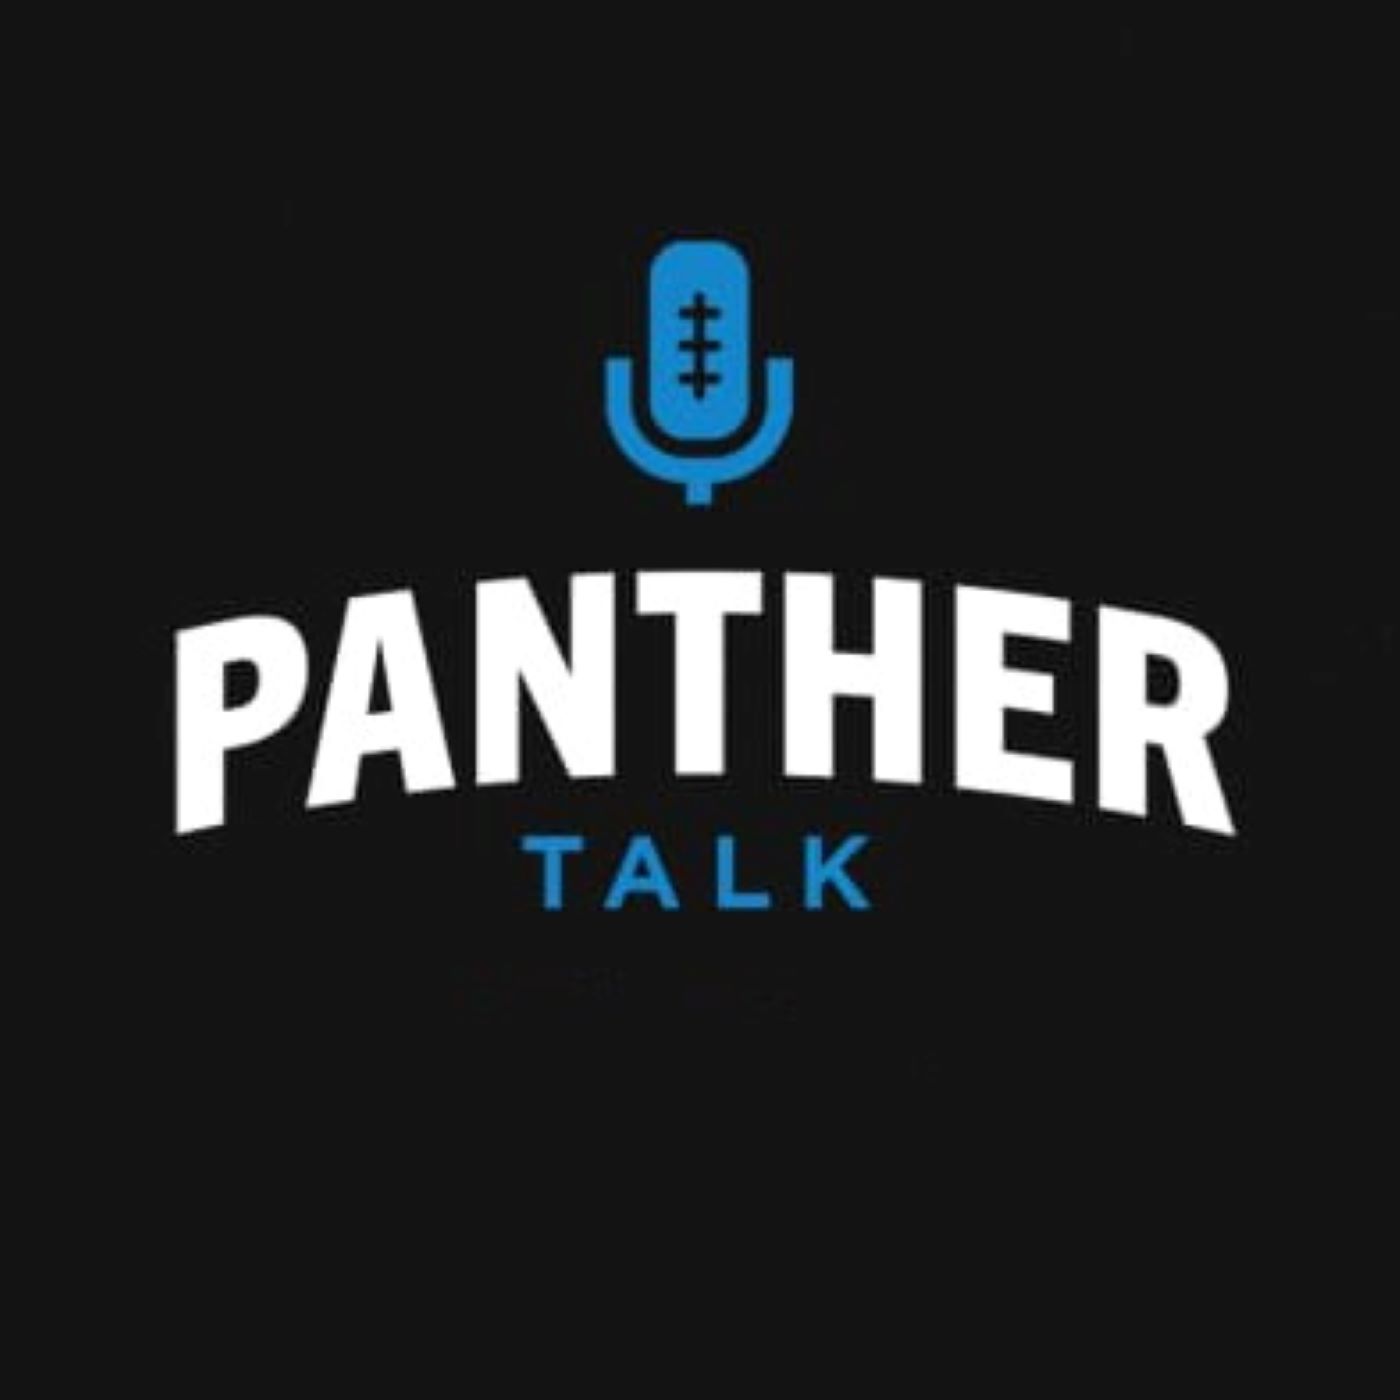 Panther Talk (September 19th)